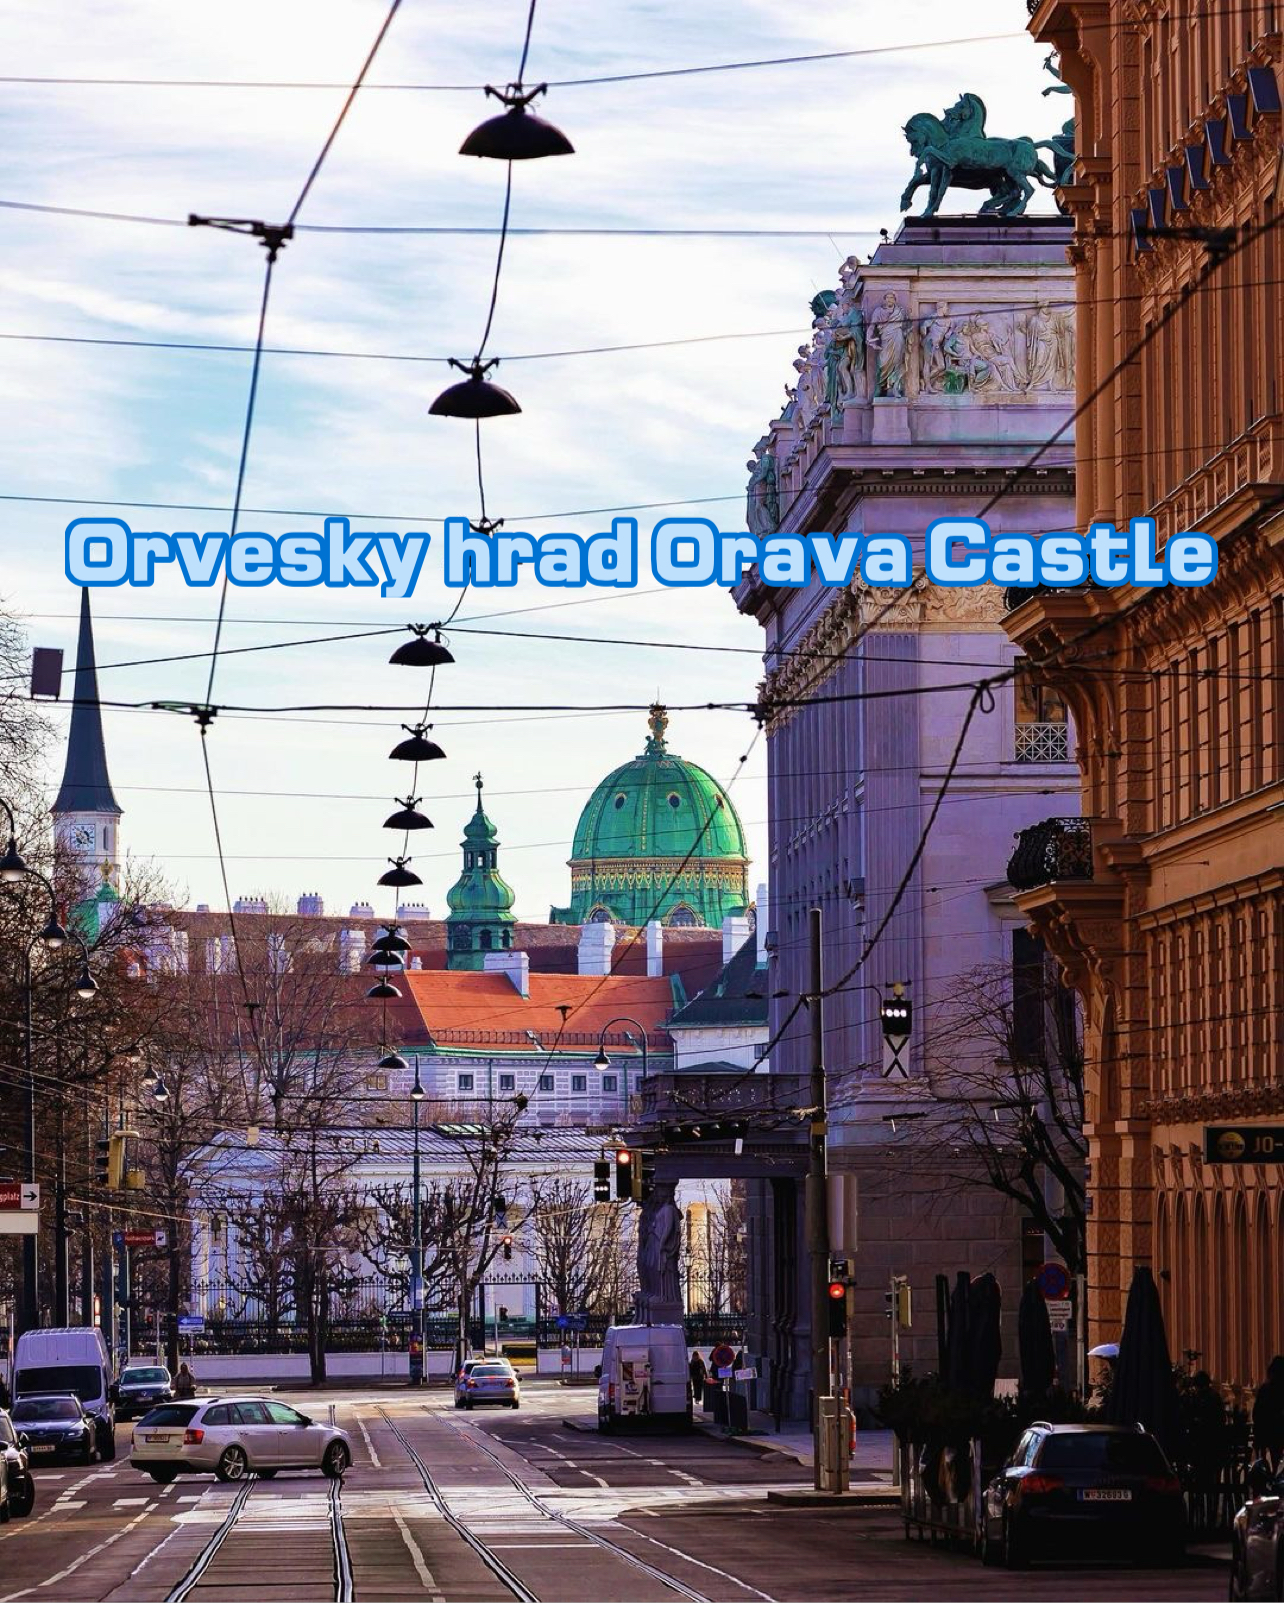 Orvesky hrad Orava Castle